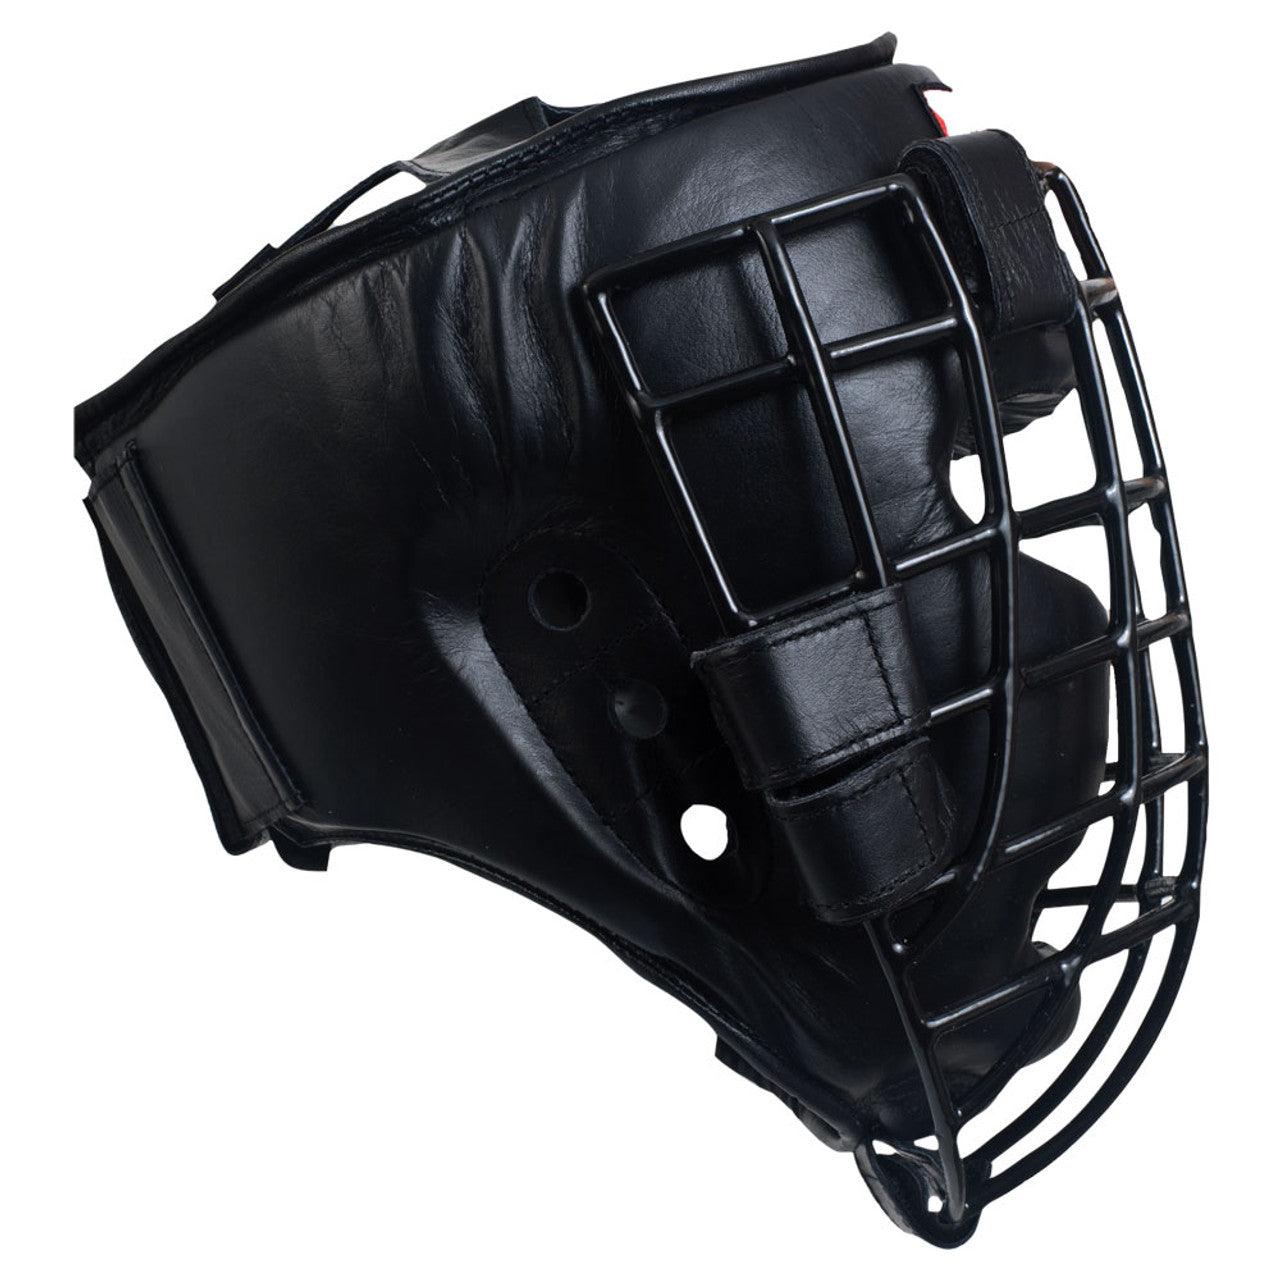 Revgear Leather Headgear with Face Cage - Violent Art Shop